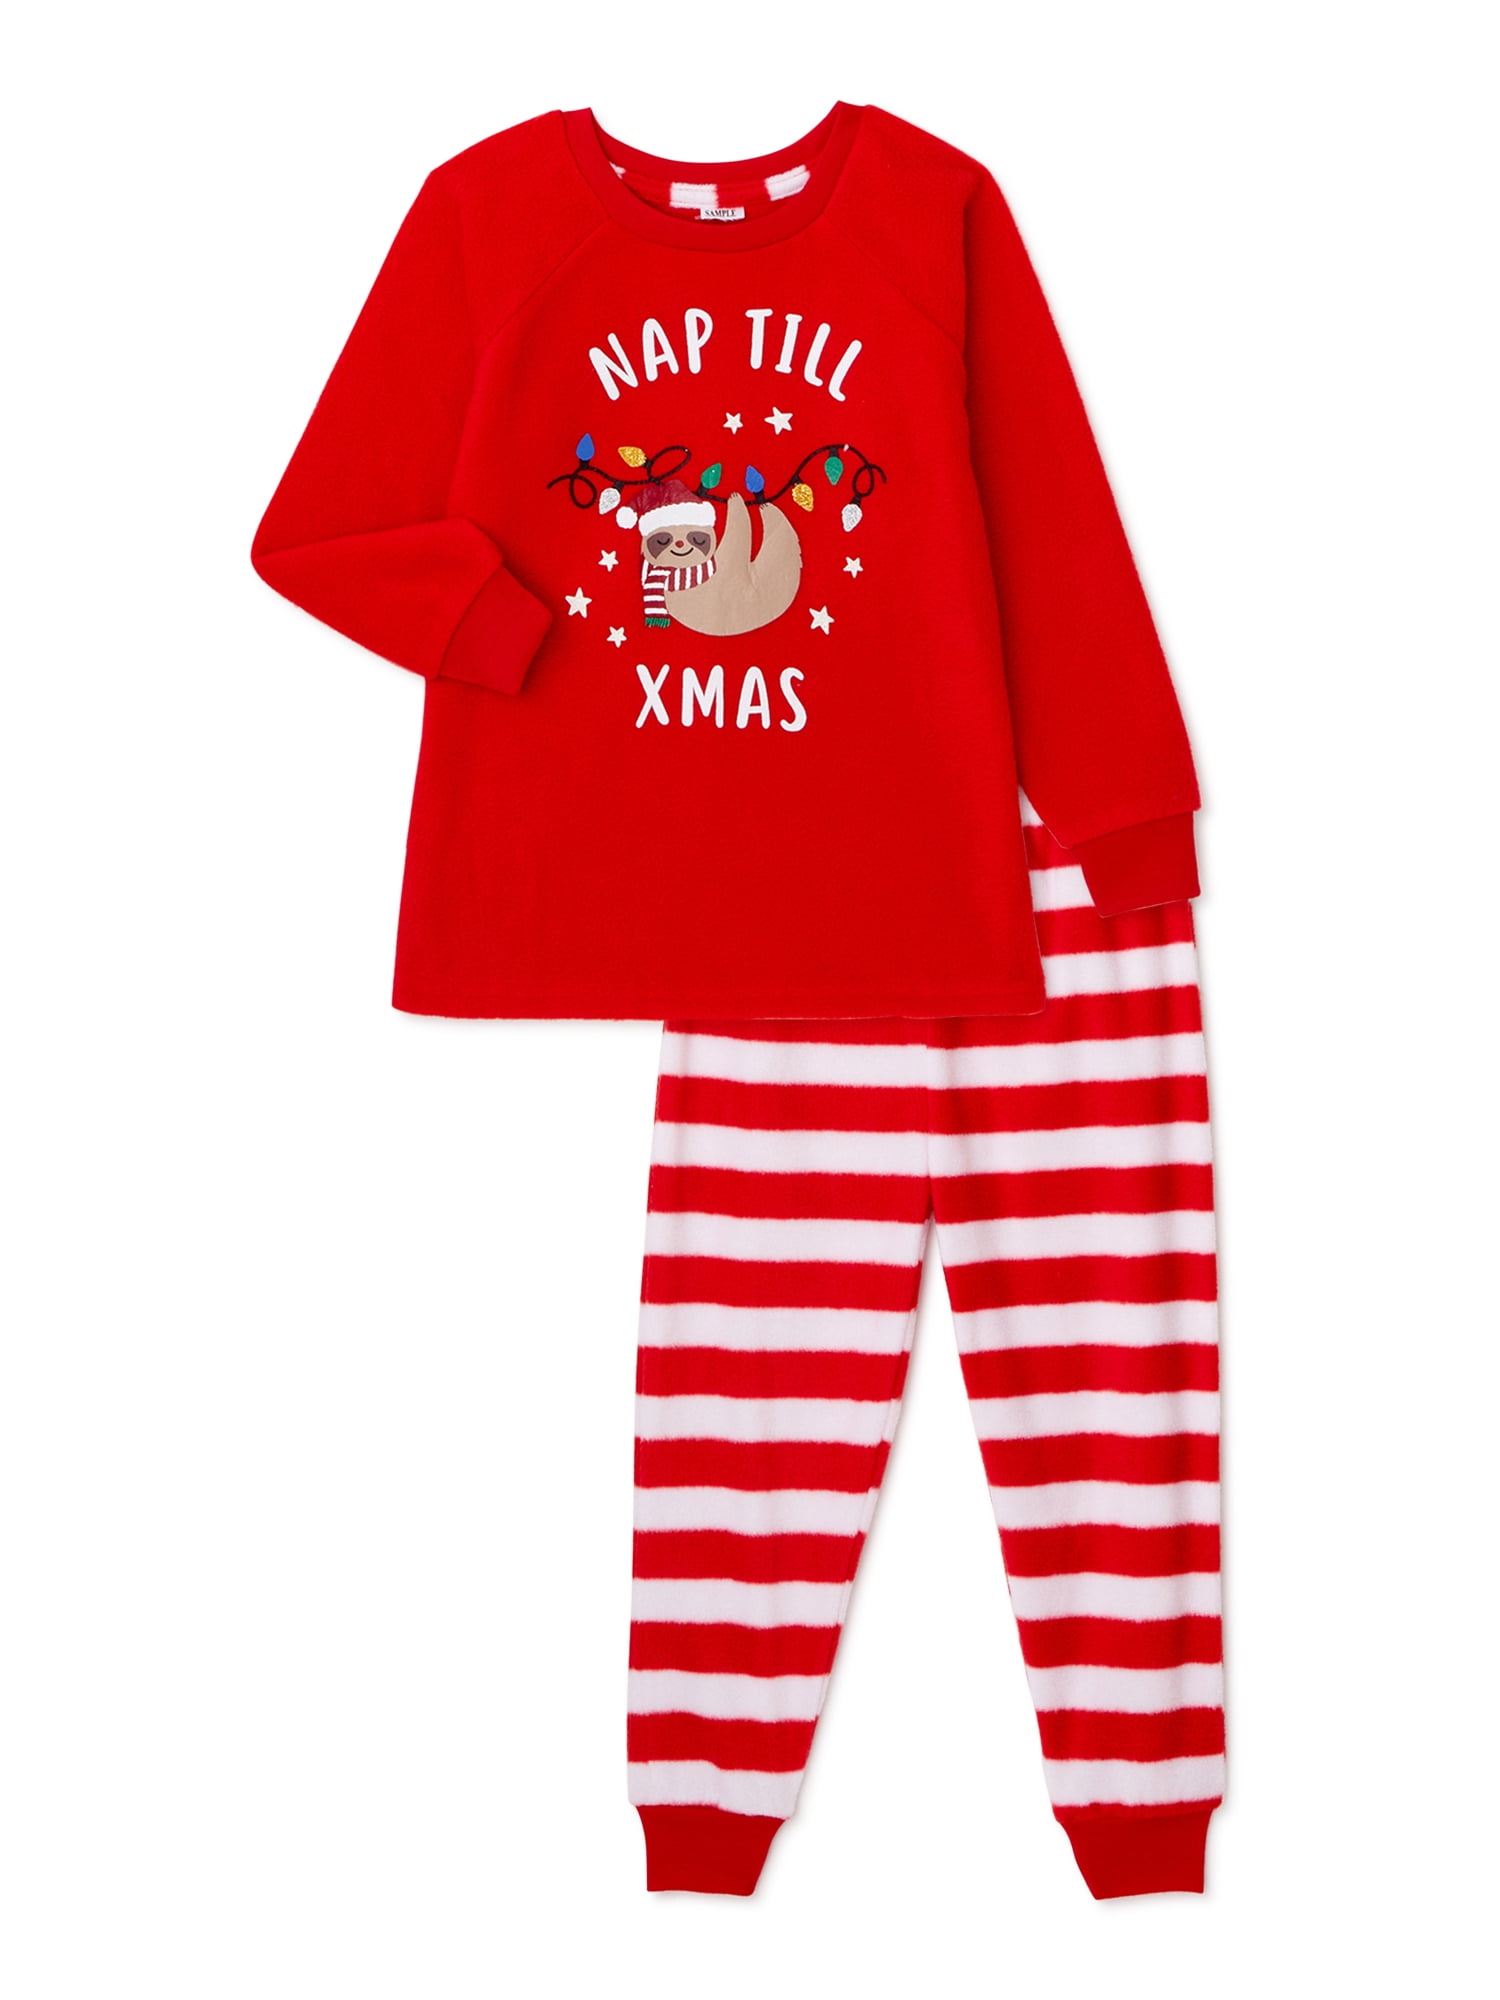 Tphon Girls Christmas Pajamas Toddler Boy Kids Holiday Pajamas Set Santa PJS Winter Sleepwear Children Clothes Size 2T-12Y